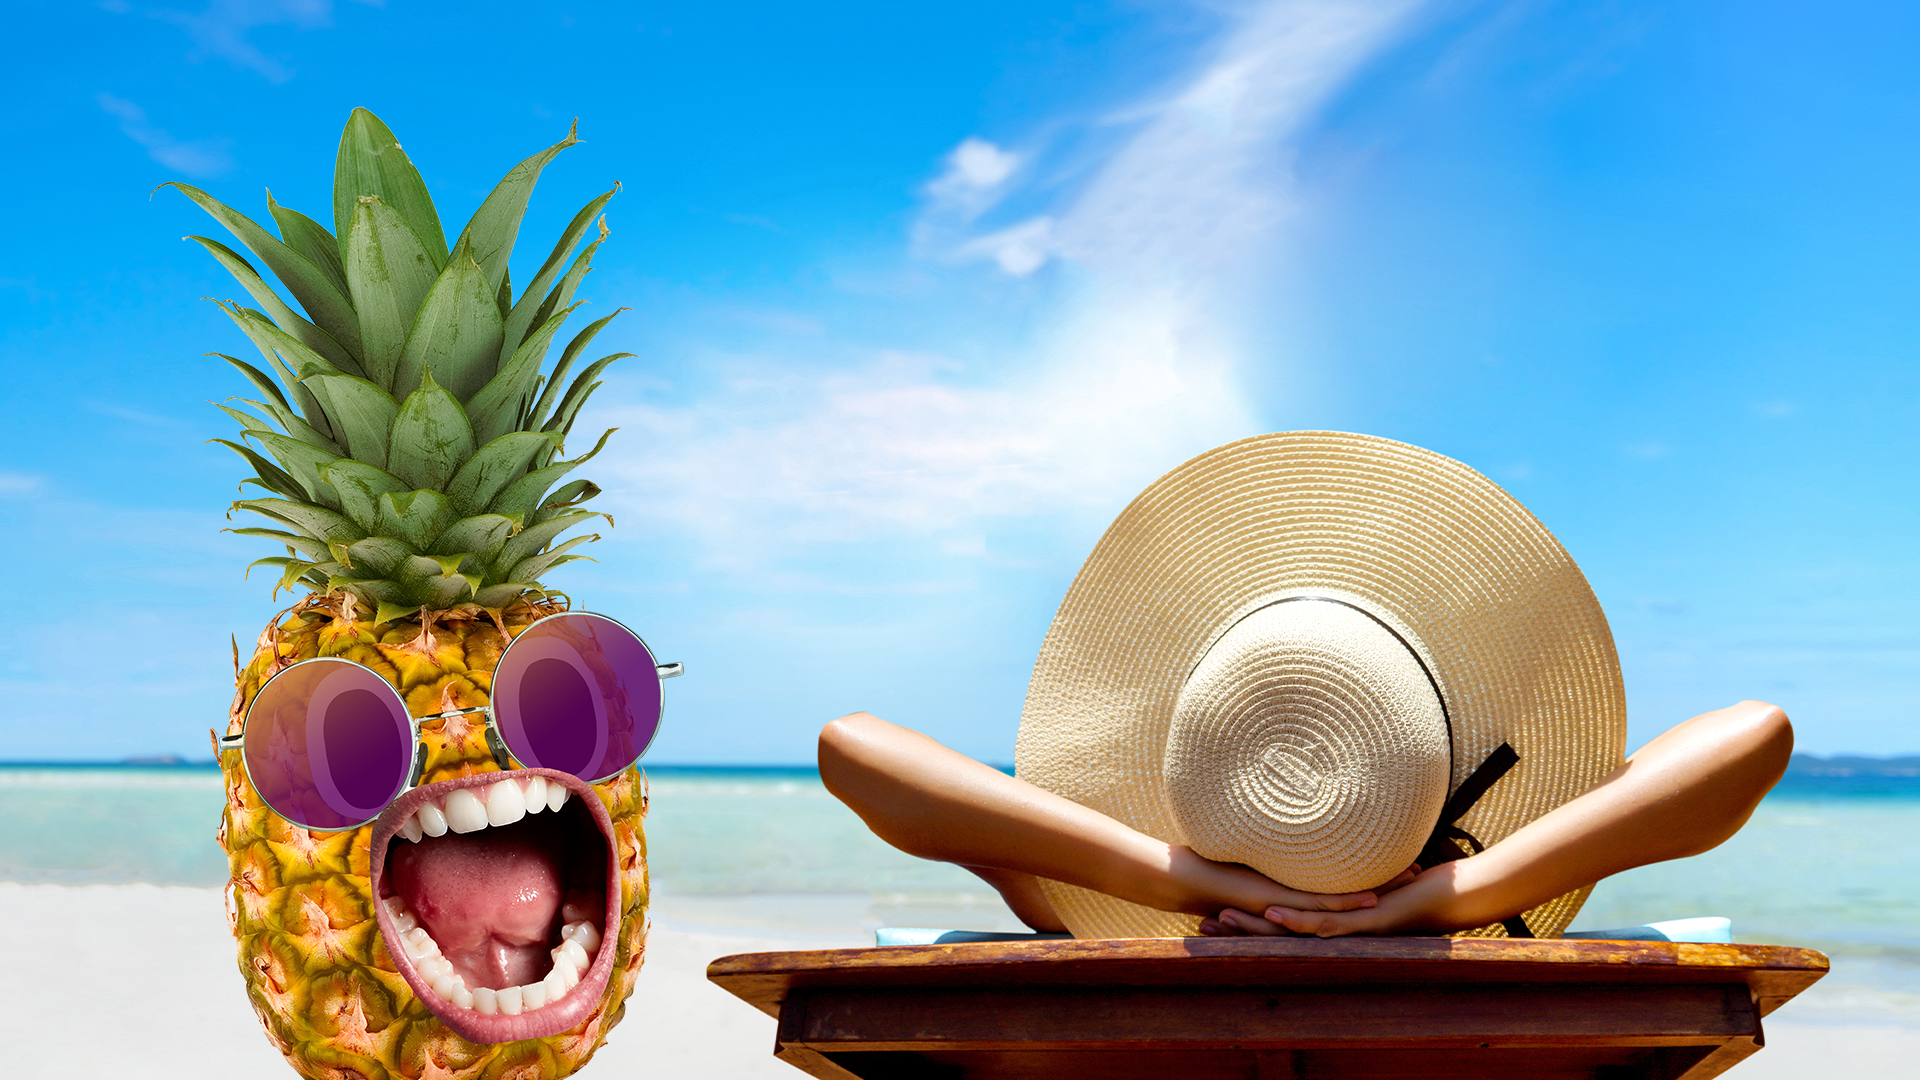 Screaming pineapple and sunbathing woman on beach